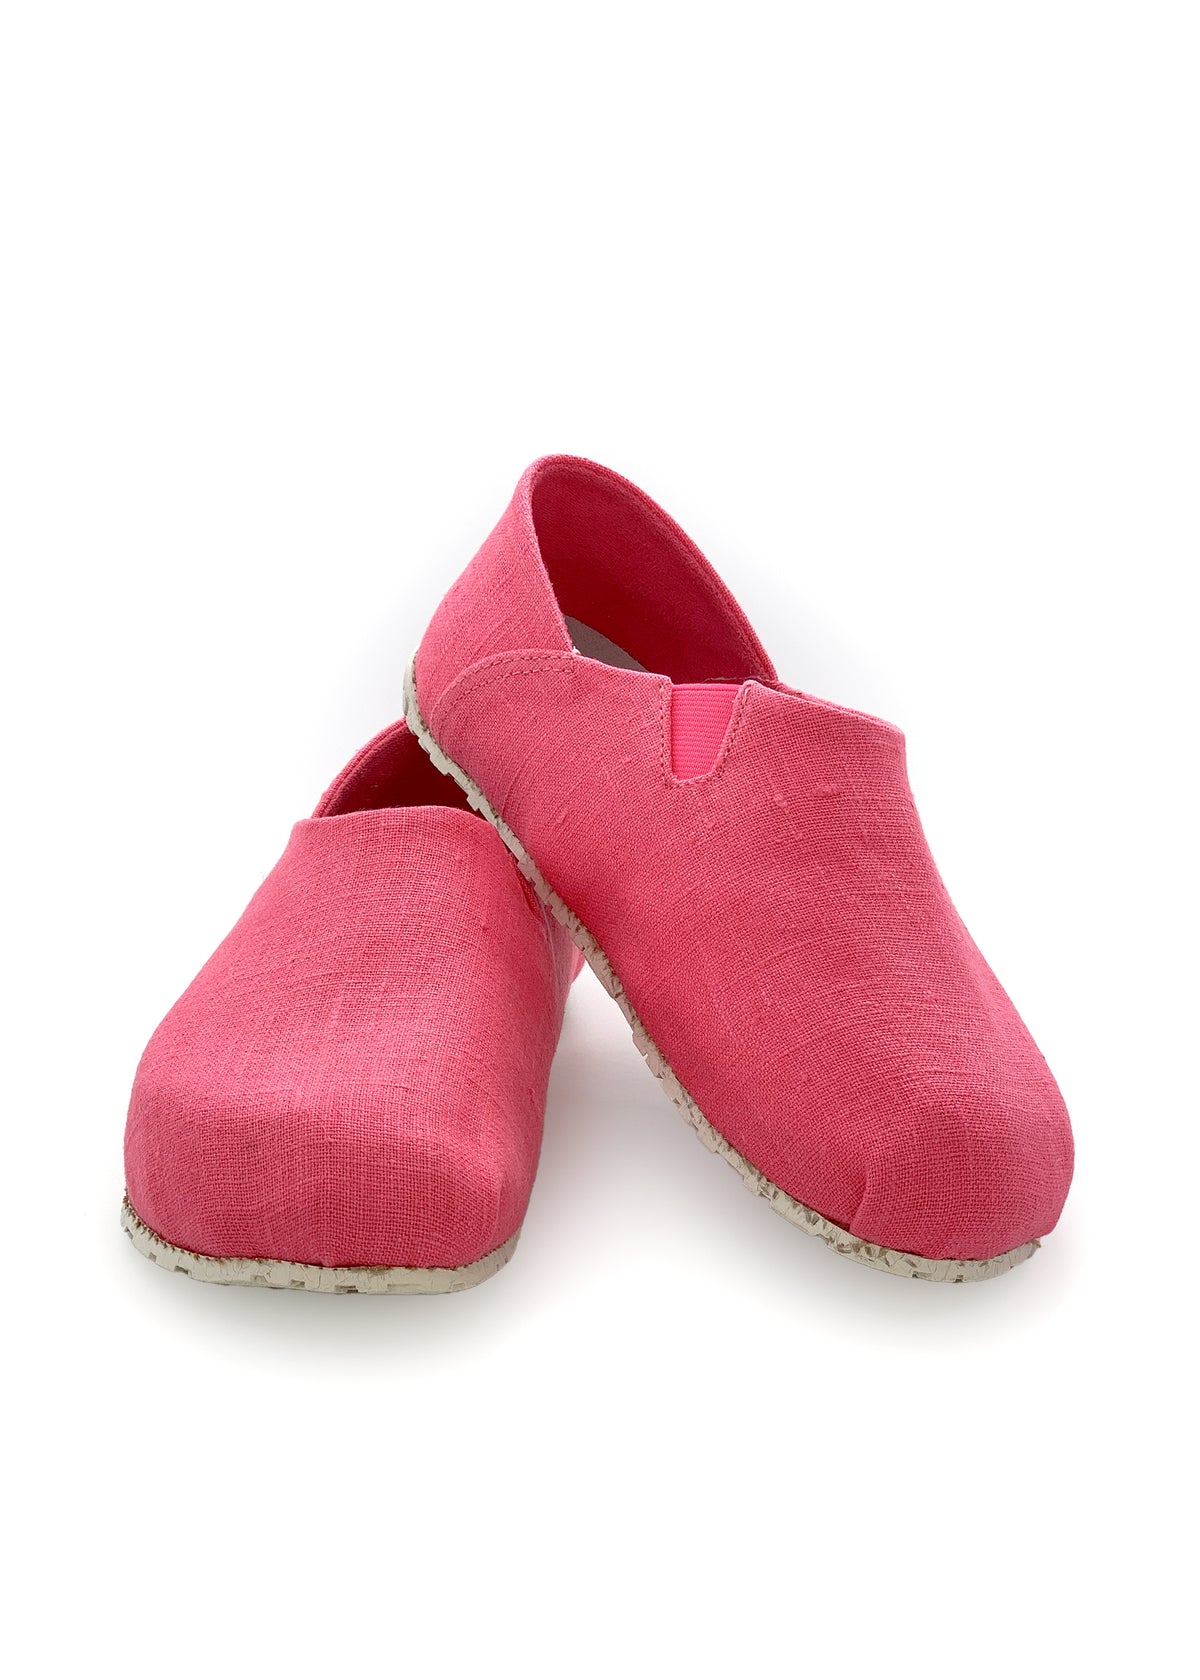 OTZ-kengät - pinkki pellavakangas